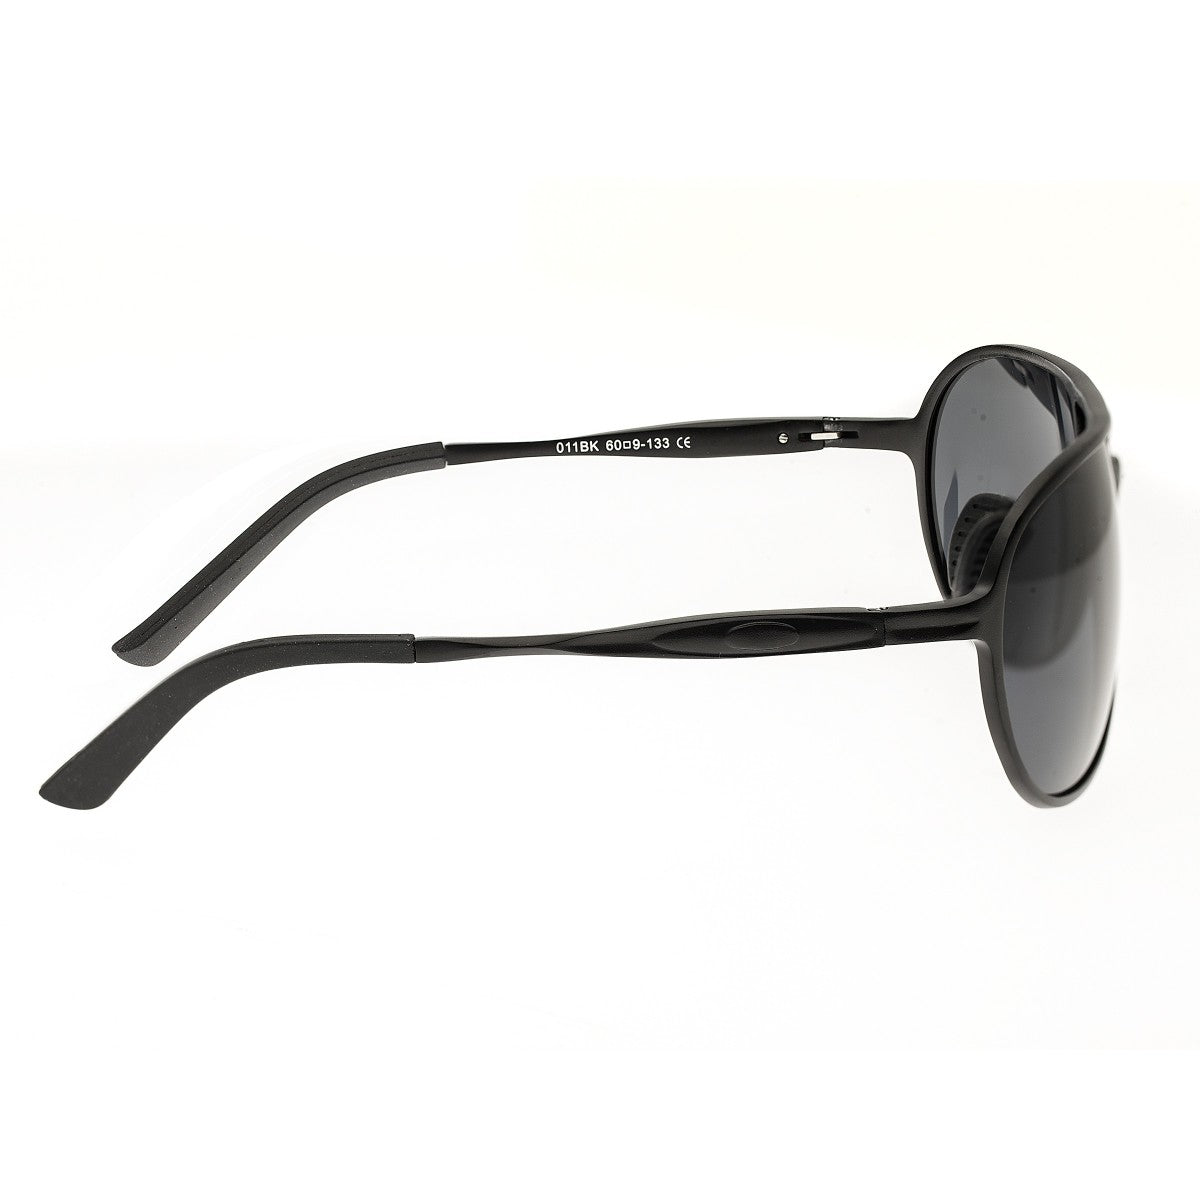 Breed Earhart Aluminium Polarized Sunglasses - Black/Black - BSG011BK